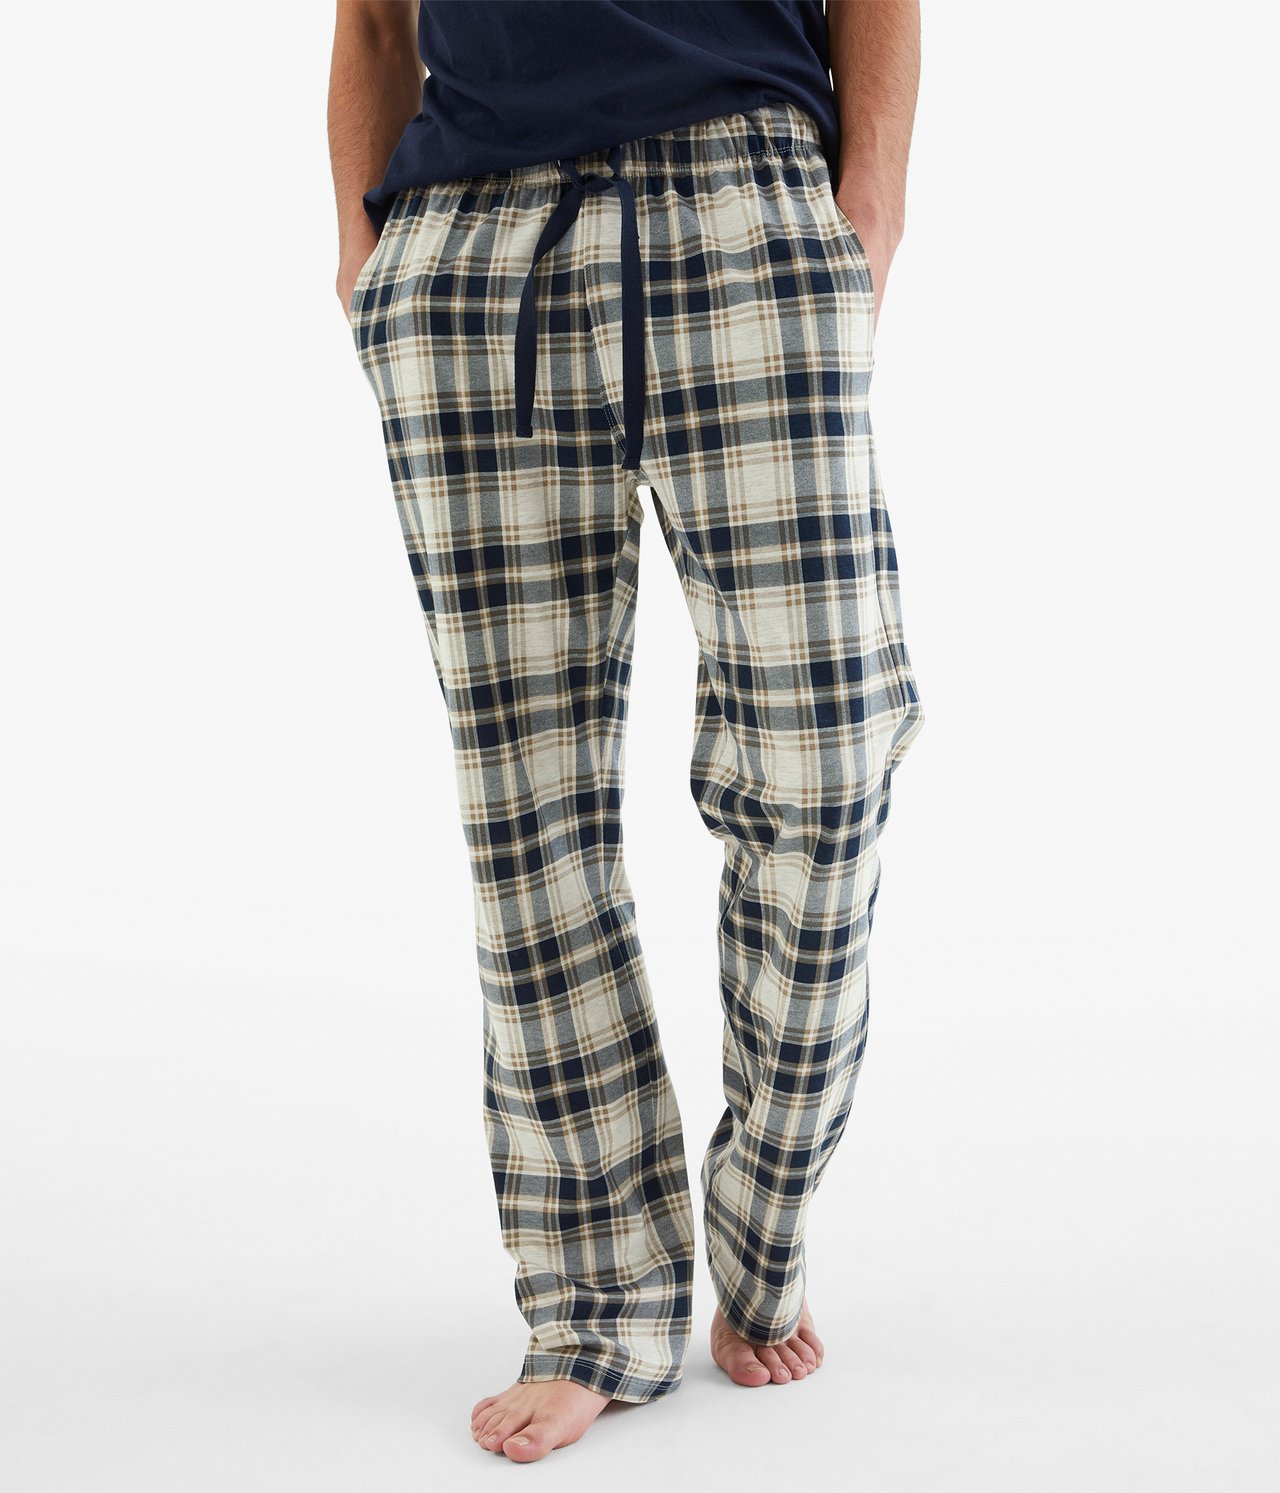 Pyjamasbukse - Mørkeblå - 189cm / Storlek: M - 2